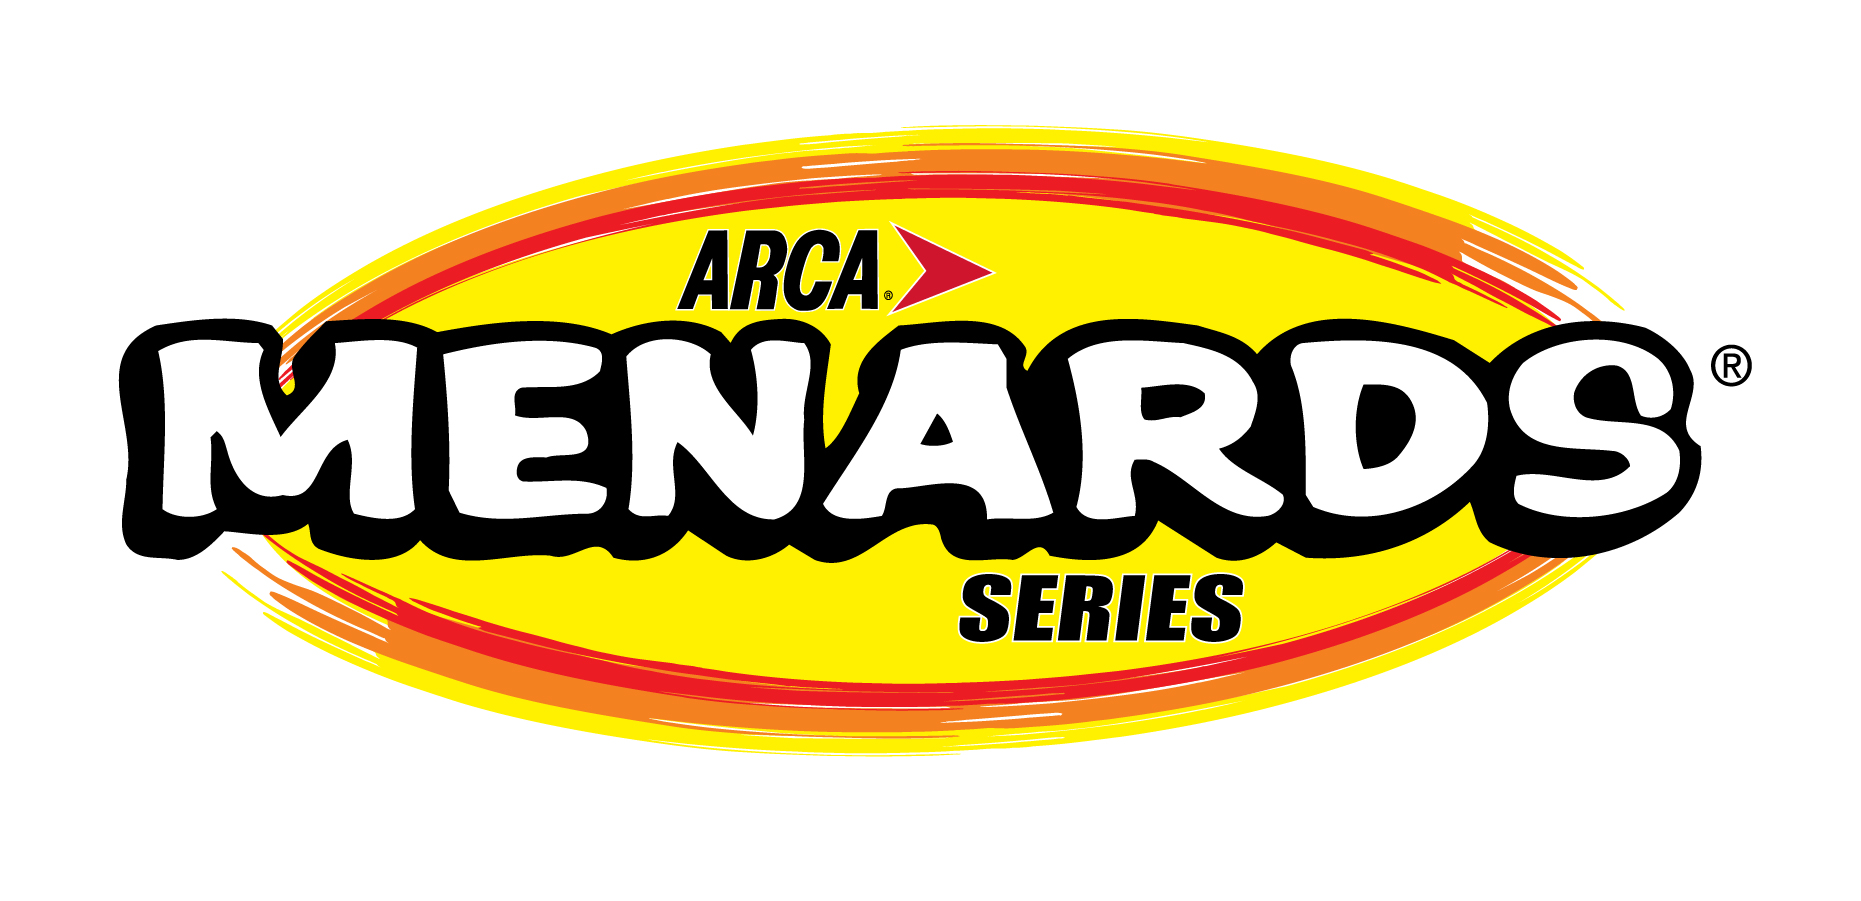 ARCA Menards Series Logo